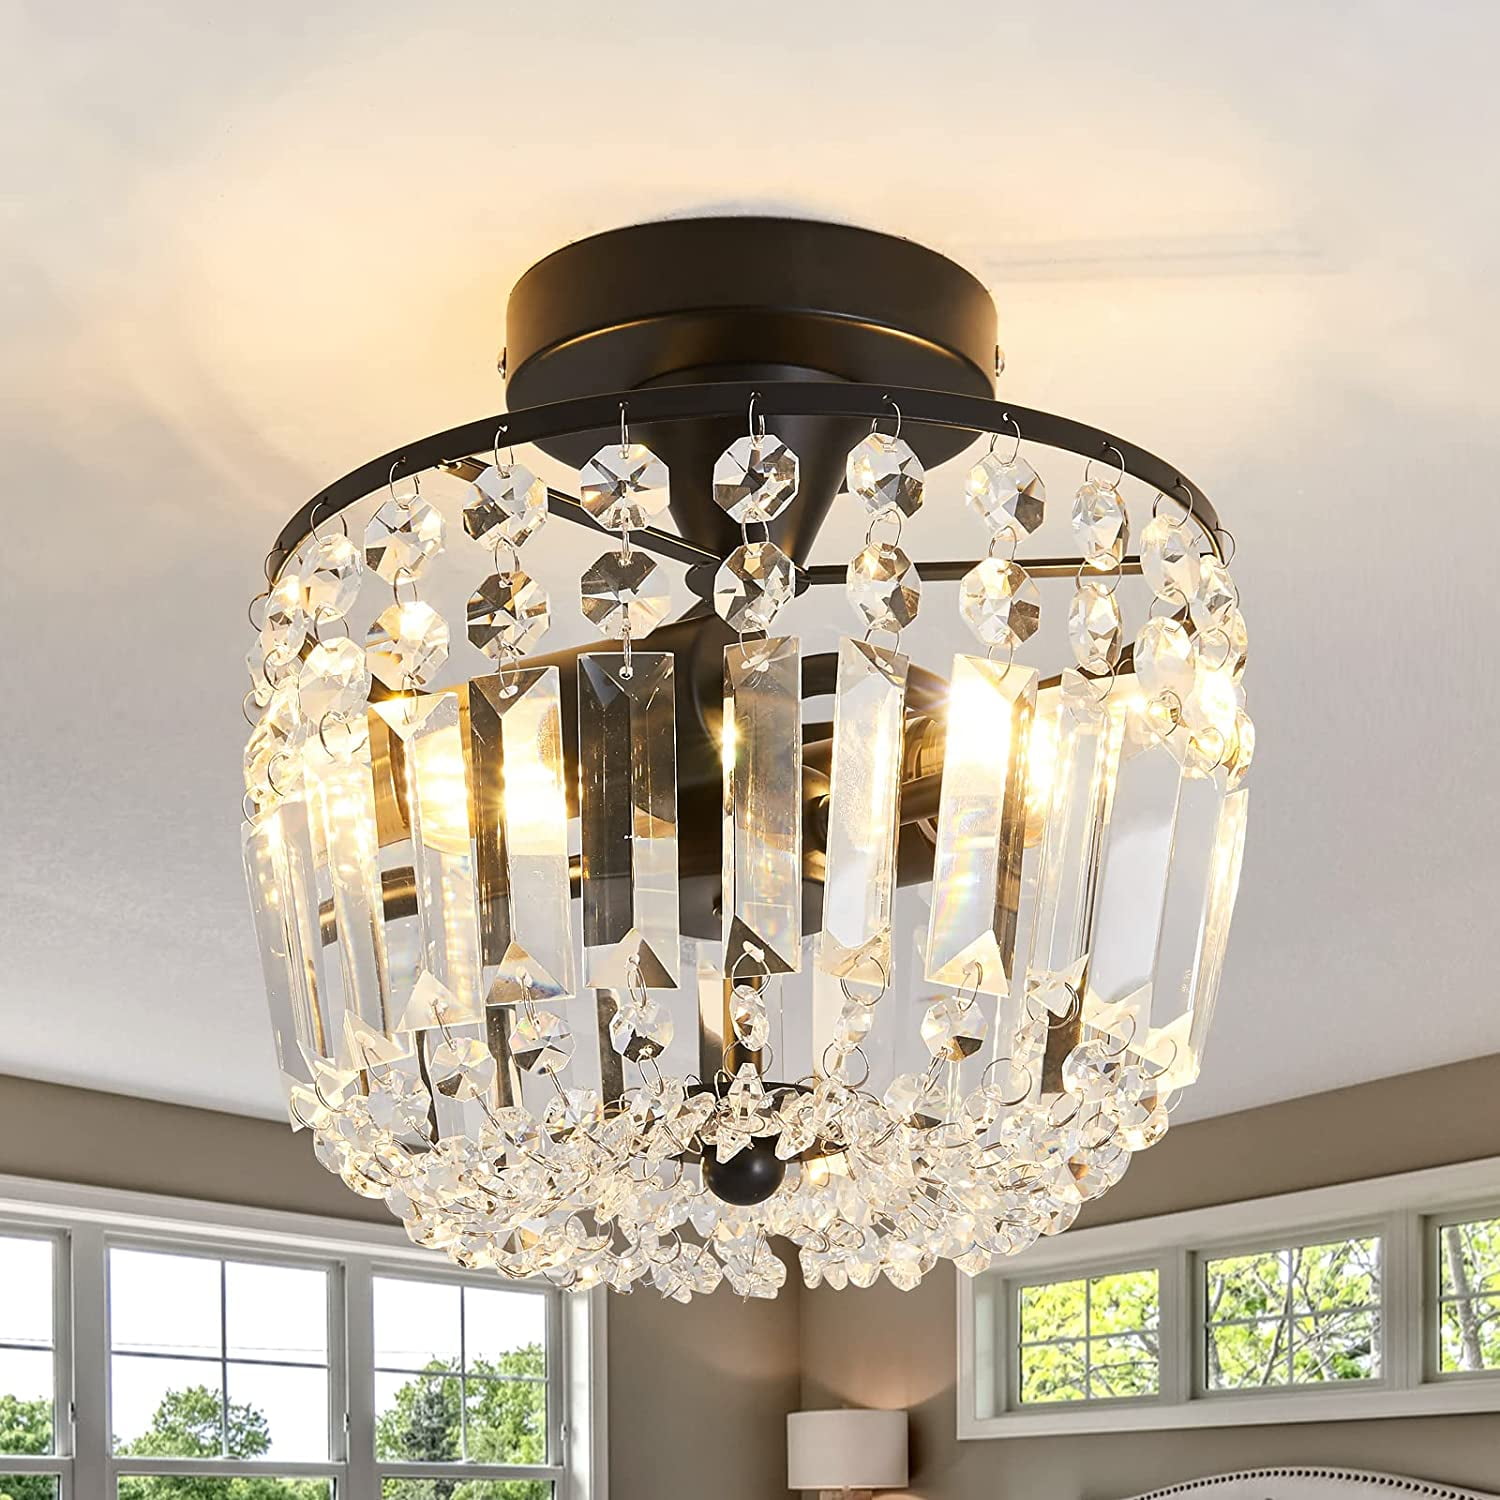 Details about   Modern Crystal LED-Ceiling Light Fixture Aisle Hallway Pendants Lamp Chandelier 